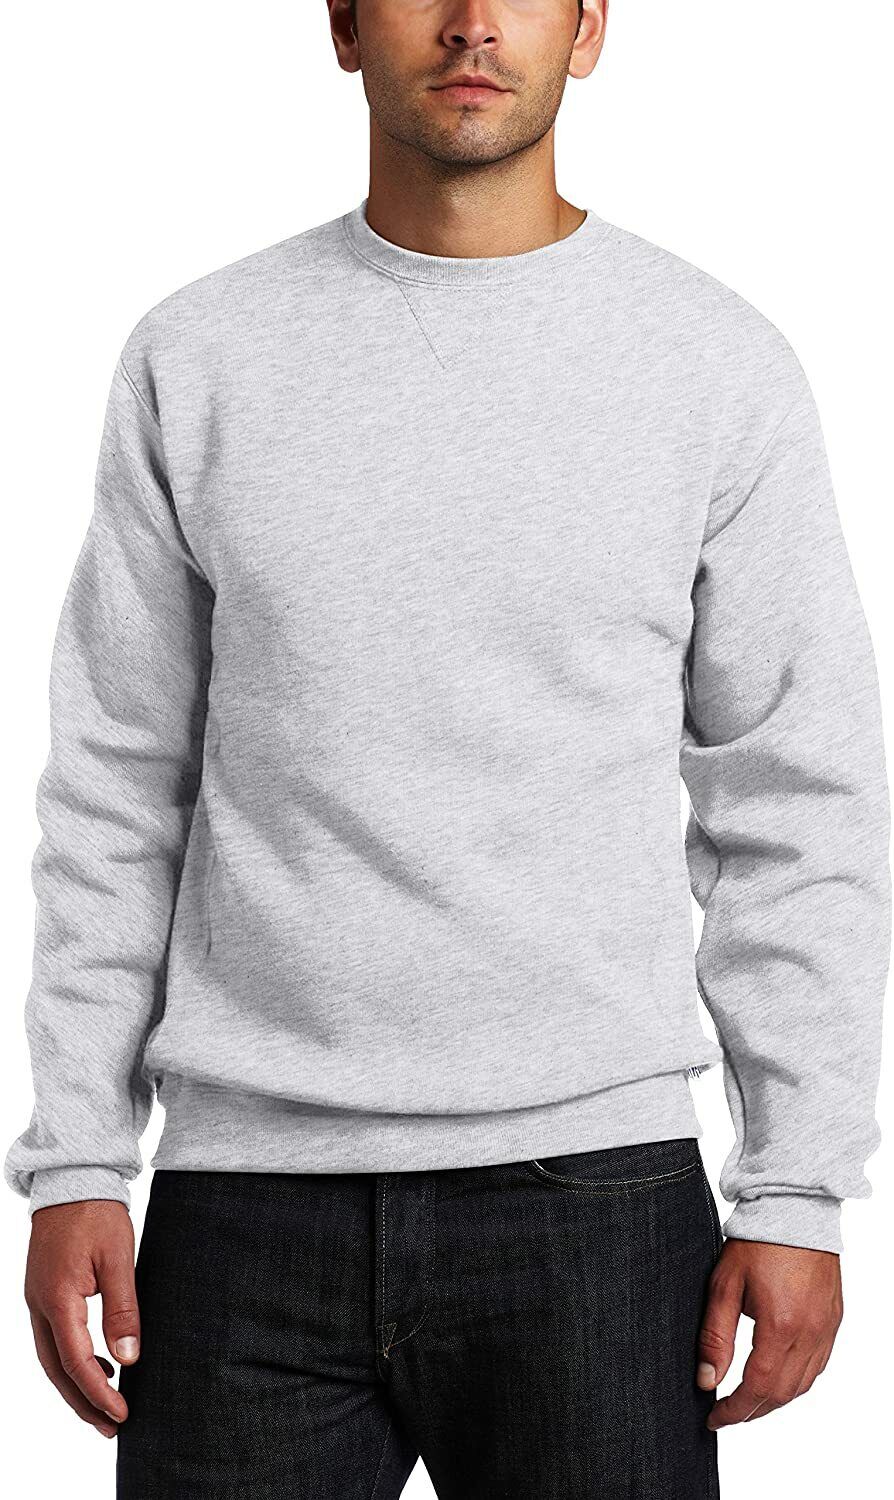 4X-Large Ash Russell Athletic Mens Dri-Power Fleece Sweatshirt